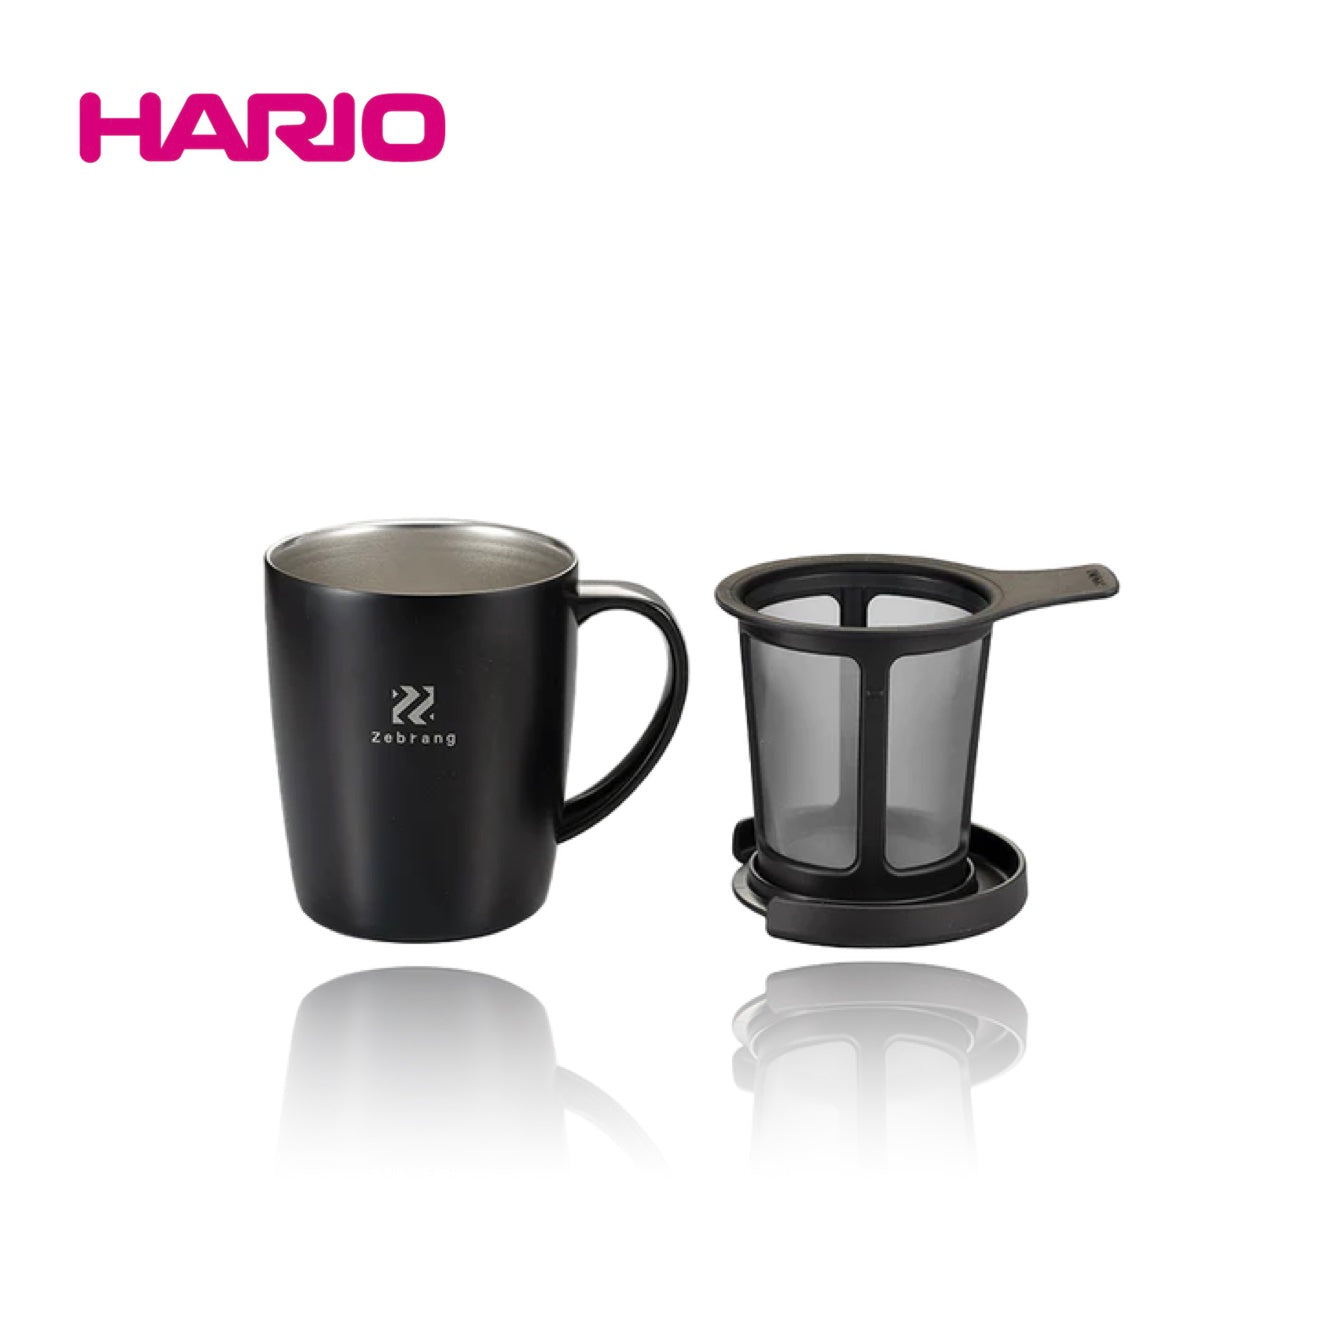 Hario Insulated Mug Coffee Maker lifestyle 1 7